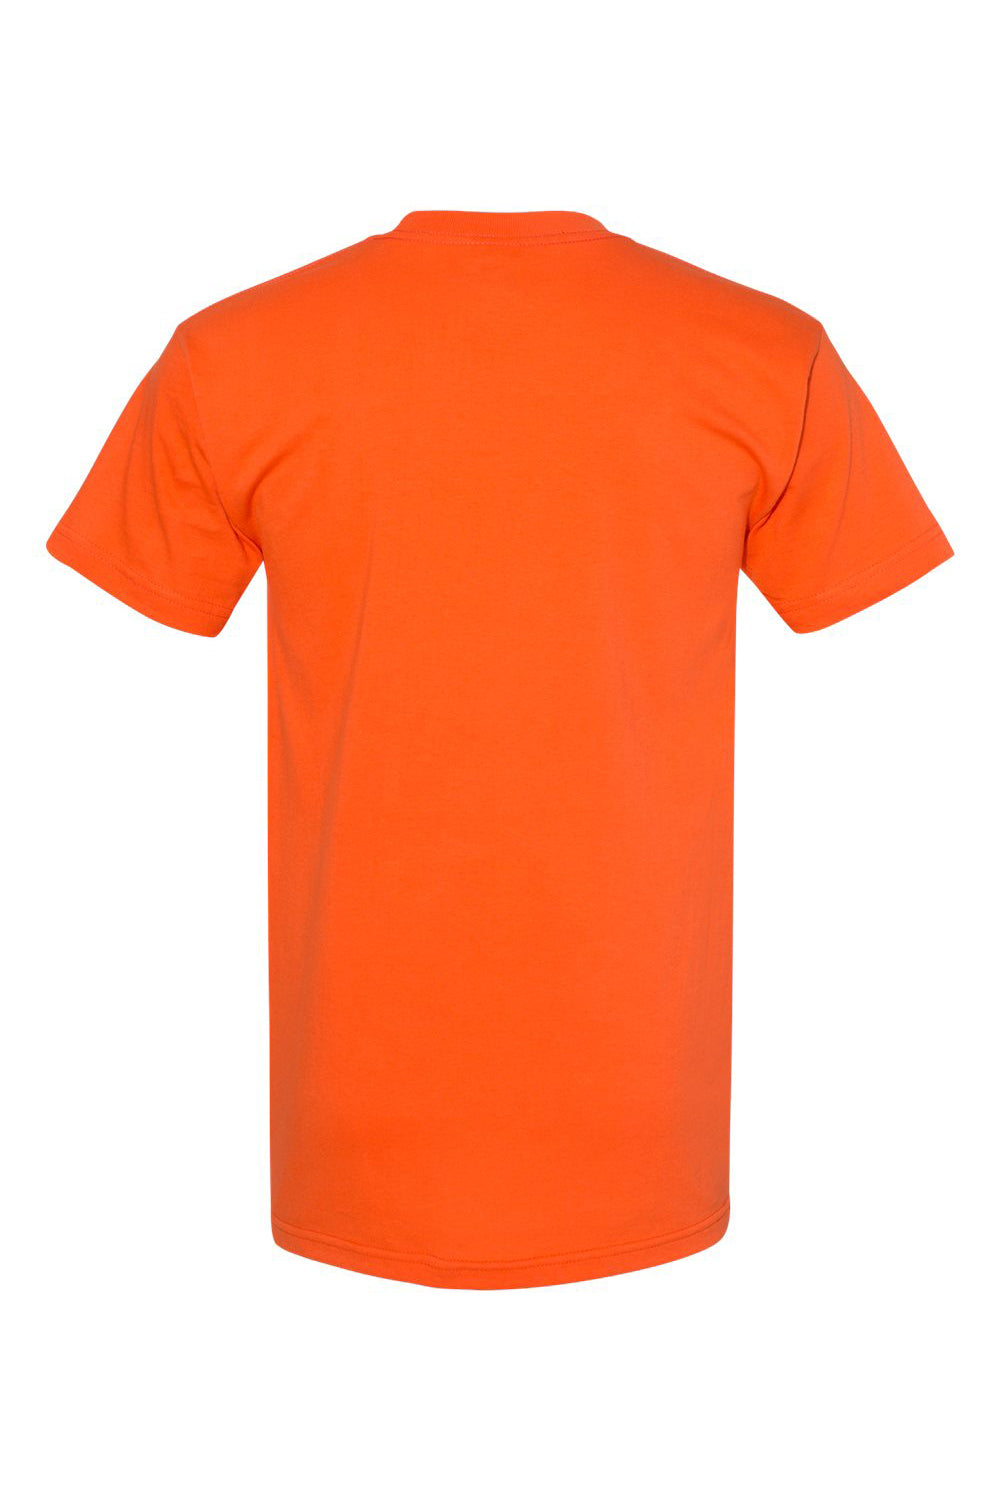 Bayside BA5100 Mens USA Made Short Sleeve Crewneck T-Shirt Bright Orange Flat Back